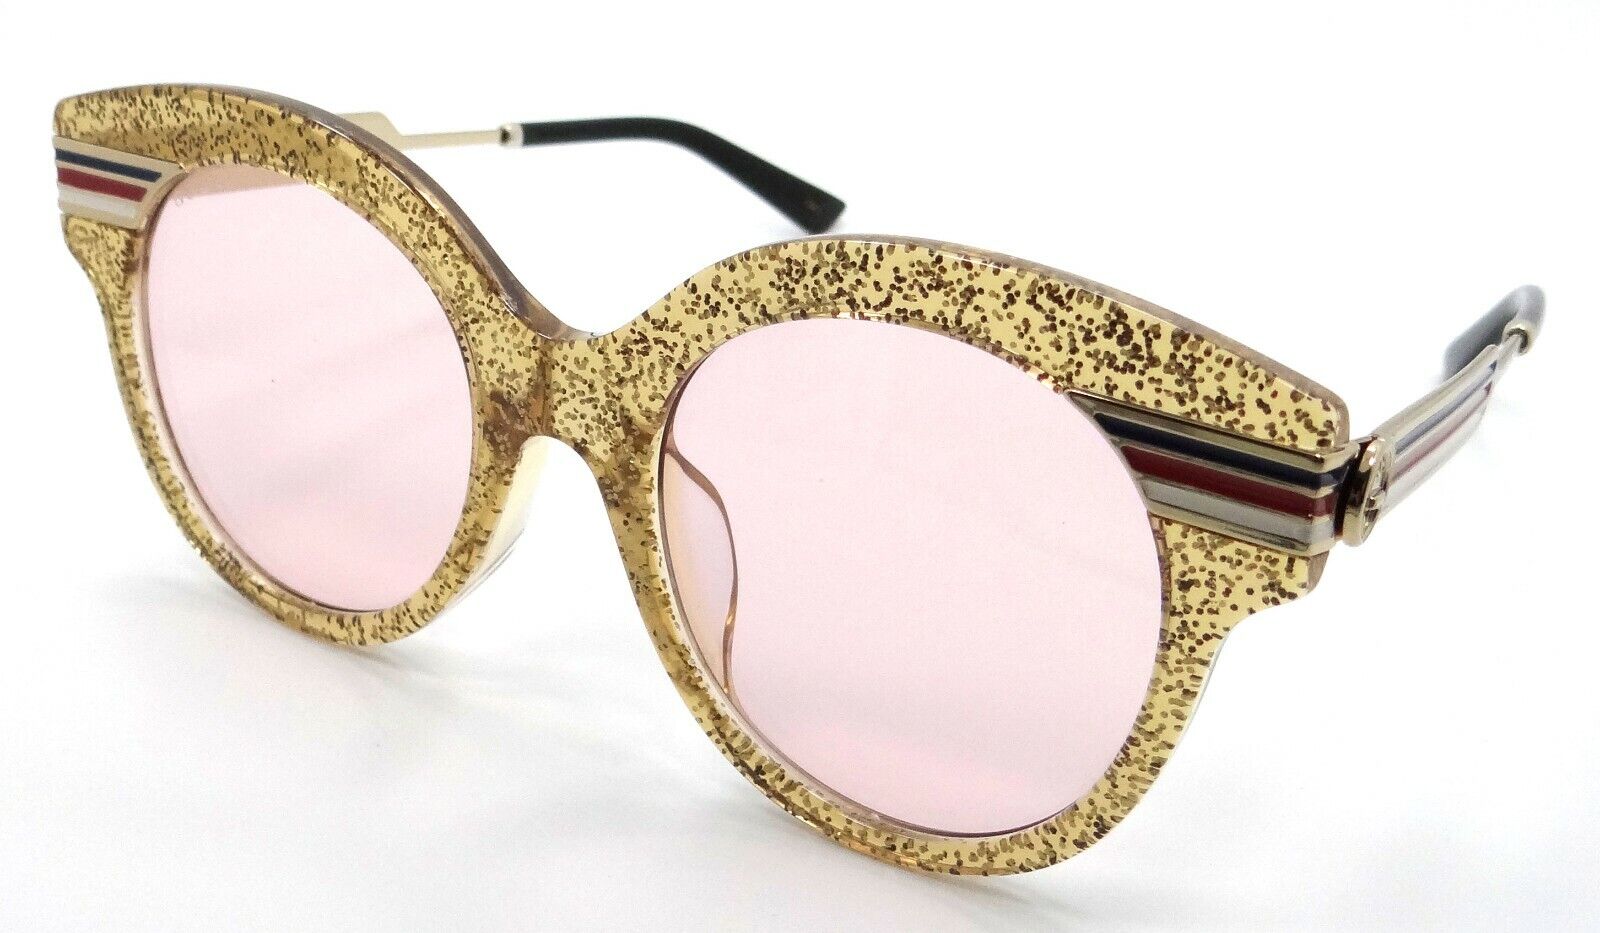 Gucci Sunglasses GG 0282SA 004 52-21-150 Glitter Gold / Pink Asian Fit Italy-889652126579-classypw.com-1